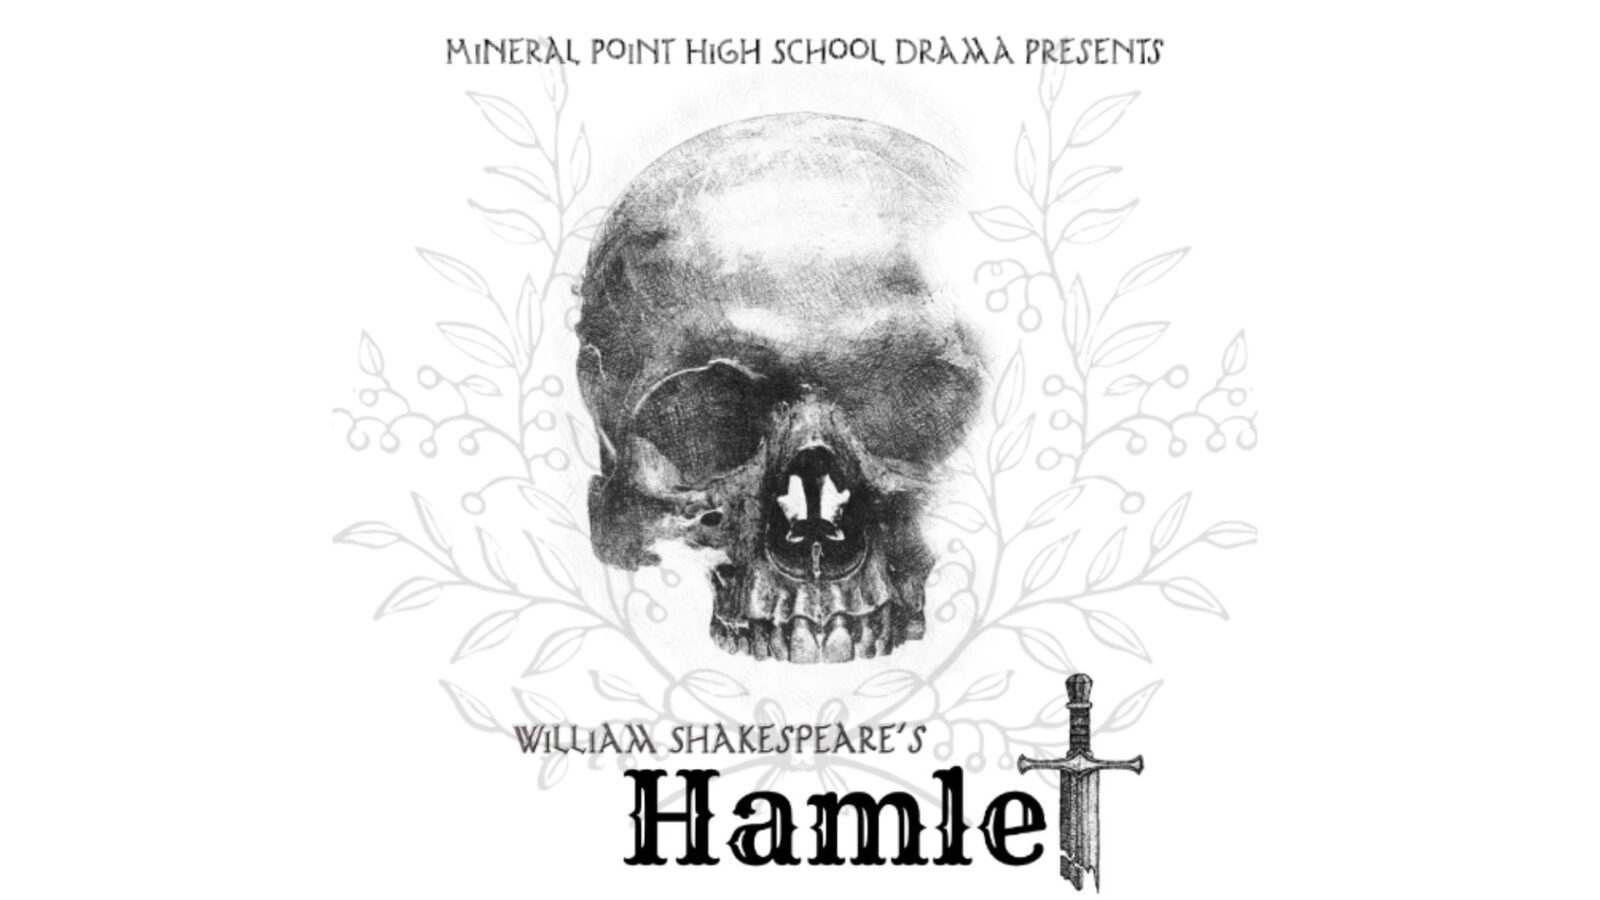 Hamlet - The Tragedy of Hamlet, Prince of Denmark